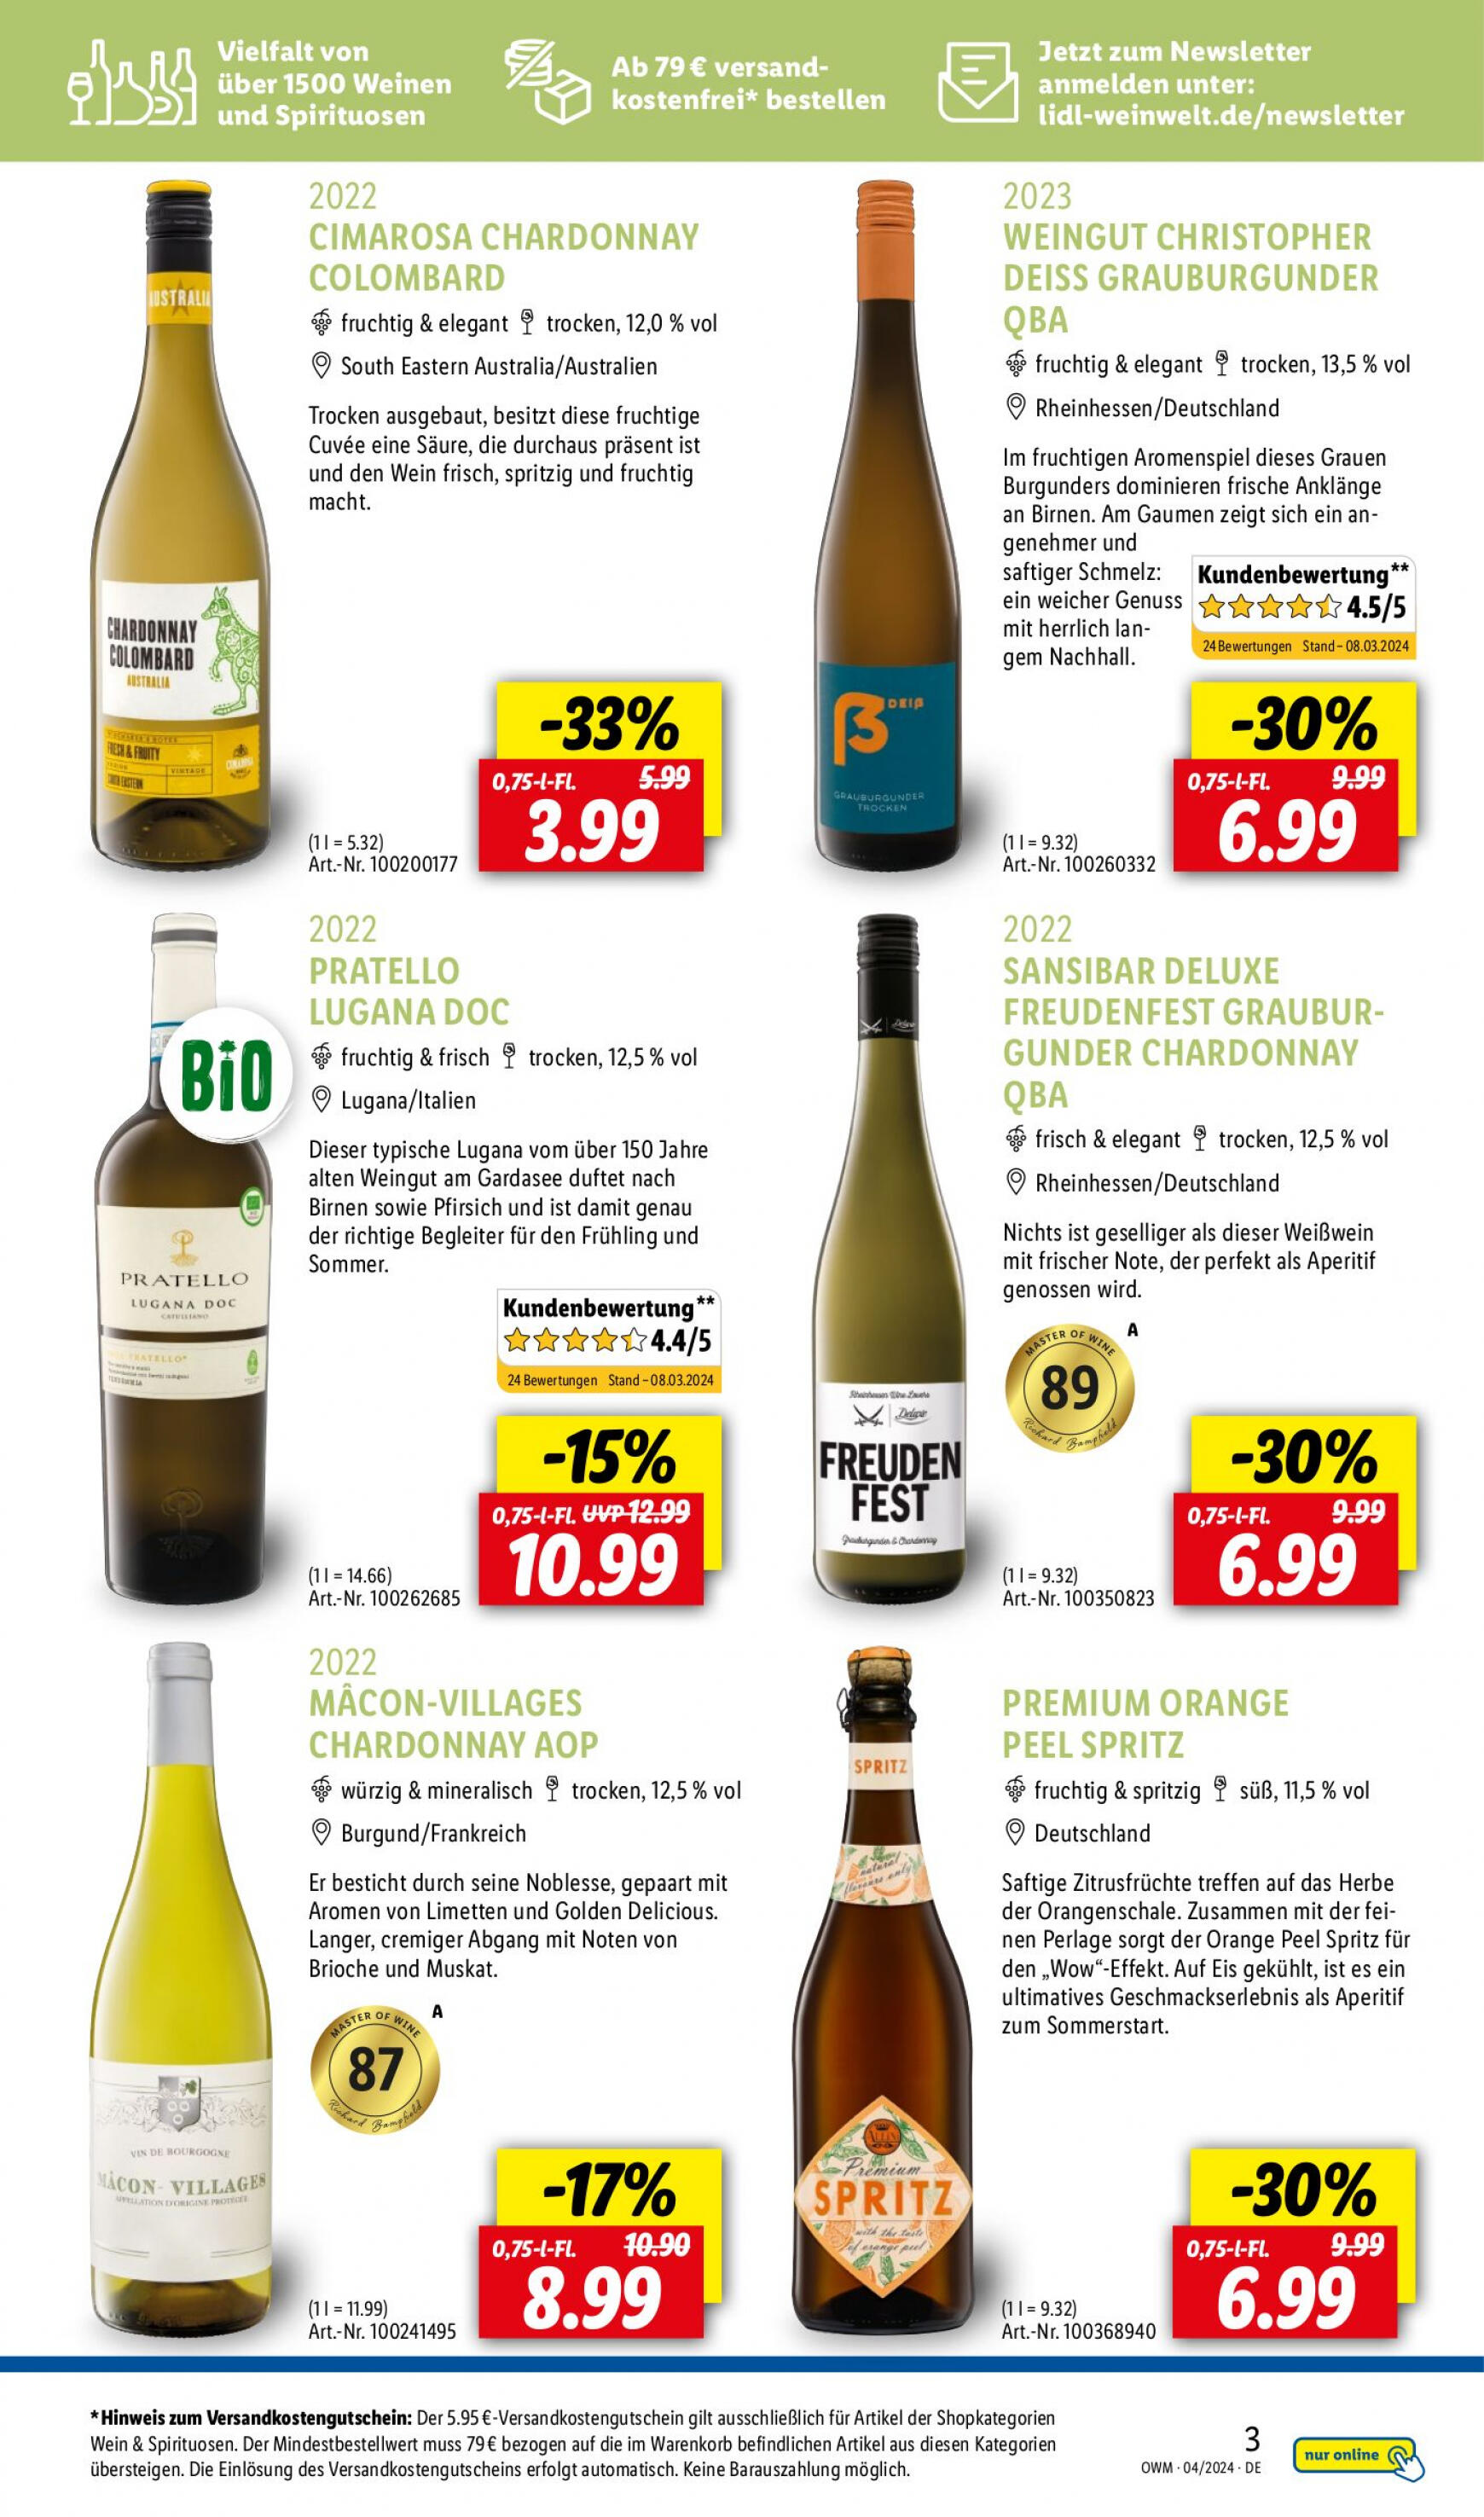 lidl - Flyer Lidl - Highlights in der Weinwelt aktuell 01.04. - 30.04. - page: 3